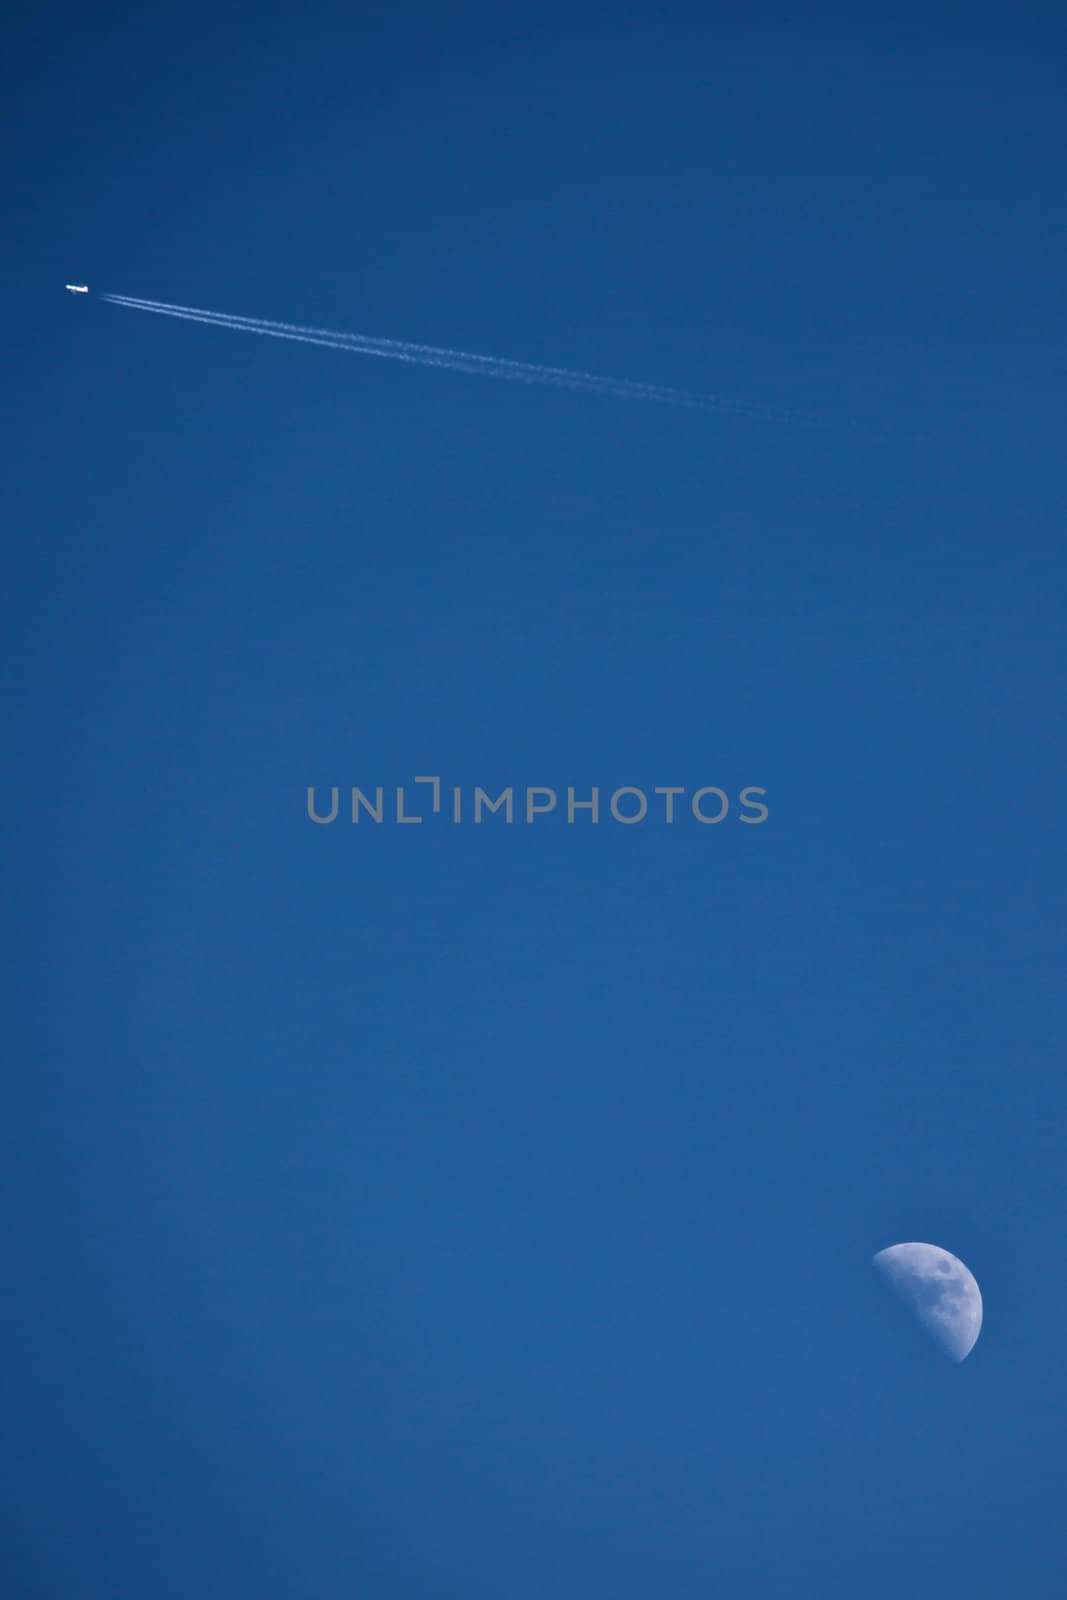 Moon and an aeroplane with a blue sky